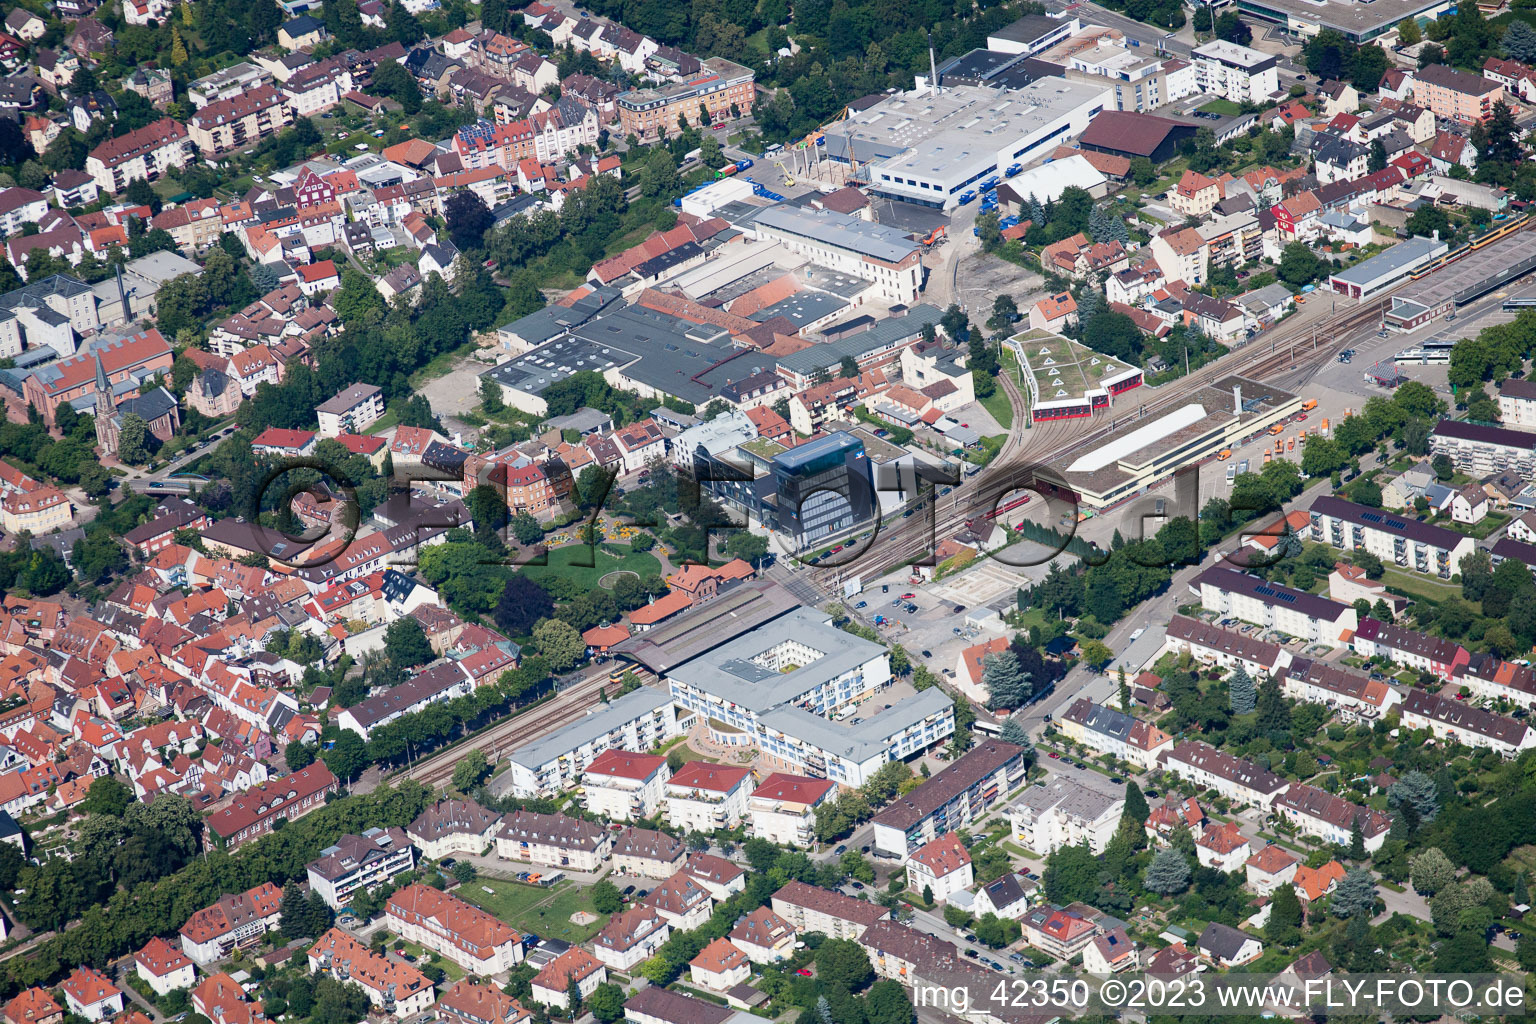 CAP Markt in Ettlingen im Bundesland Baden-Württemberg, Deutschland